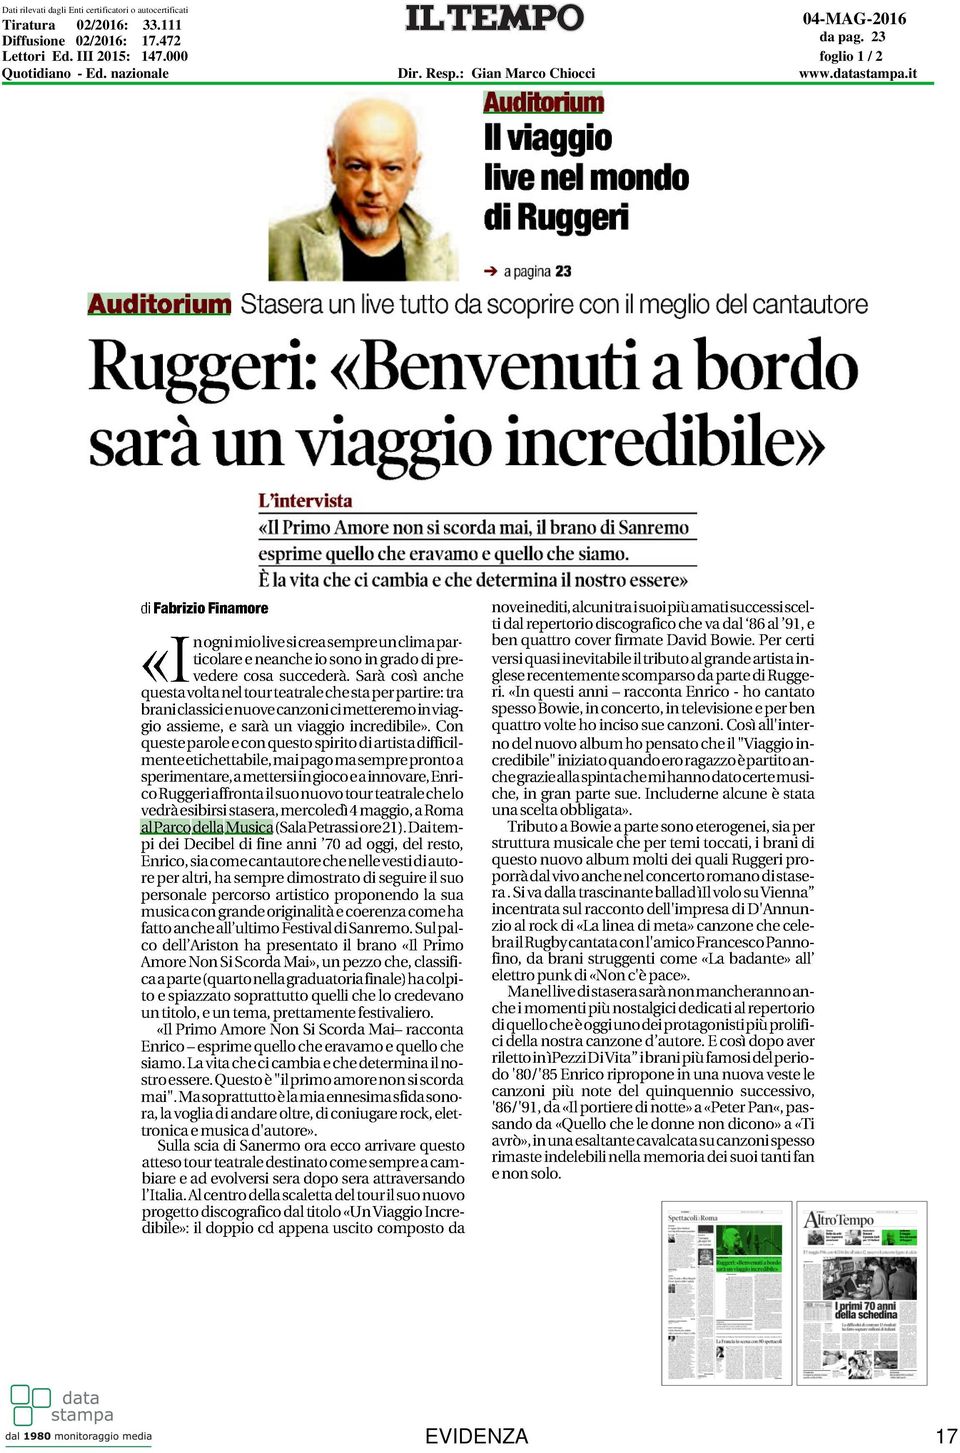 III 2015: 147.000 Quotidiano - Ed.